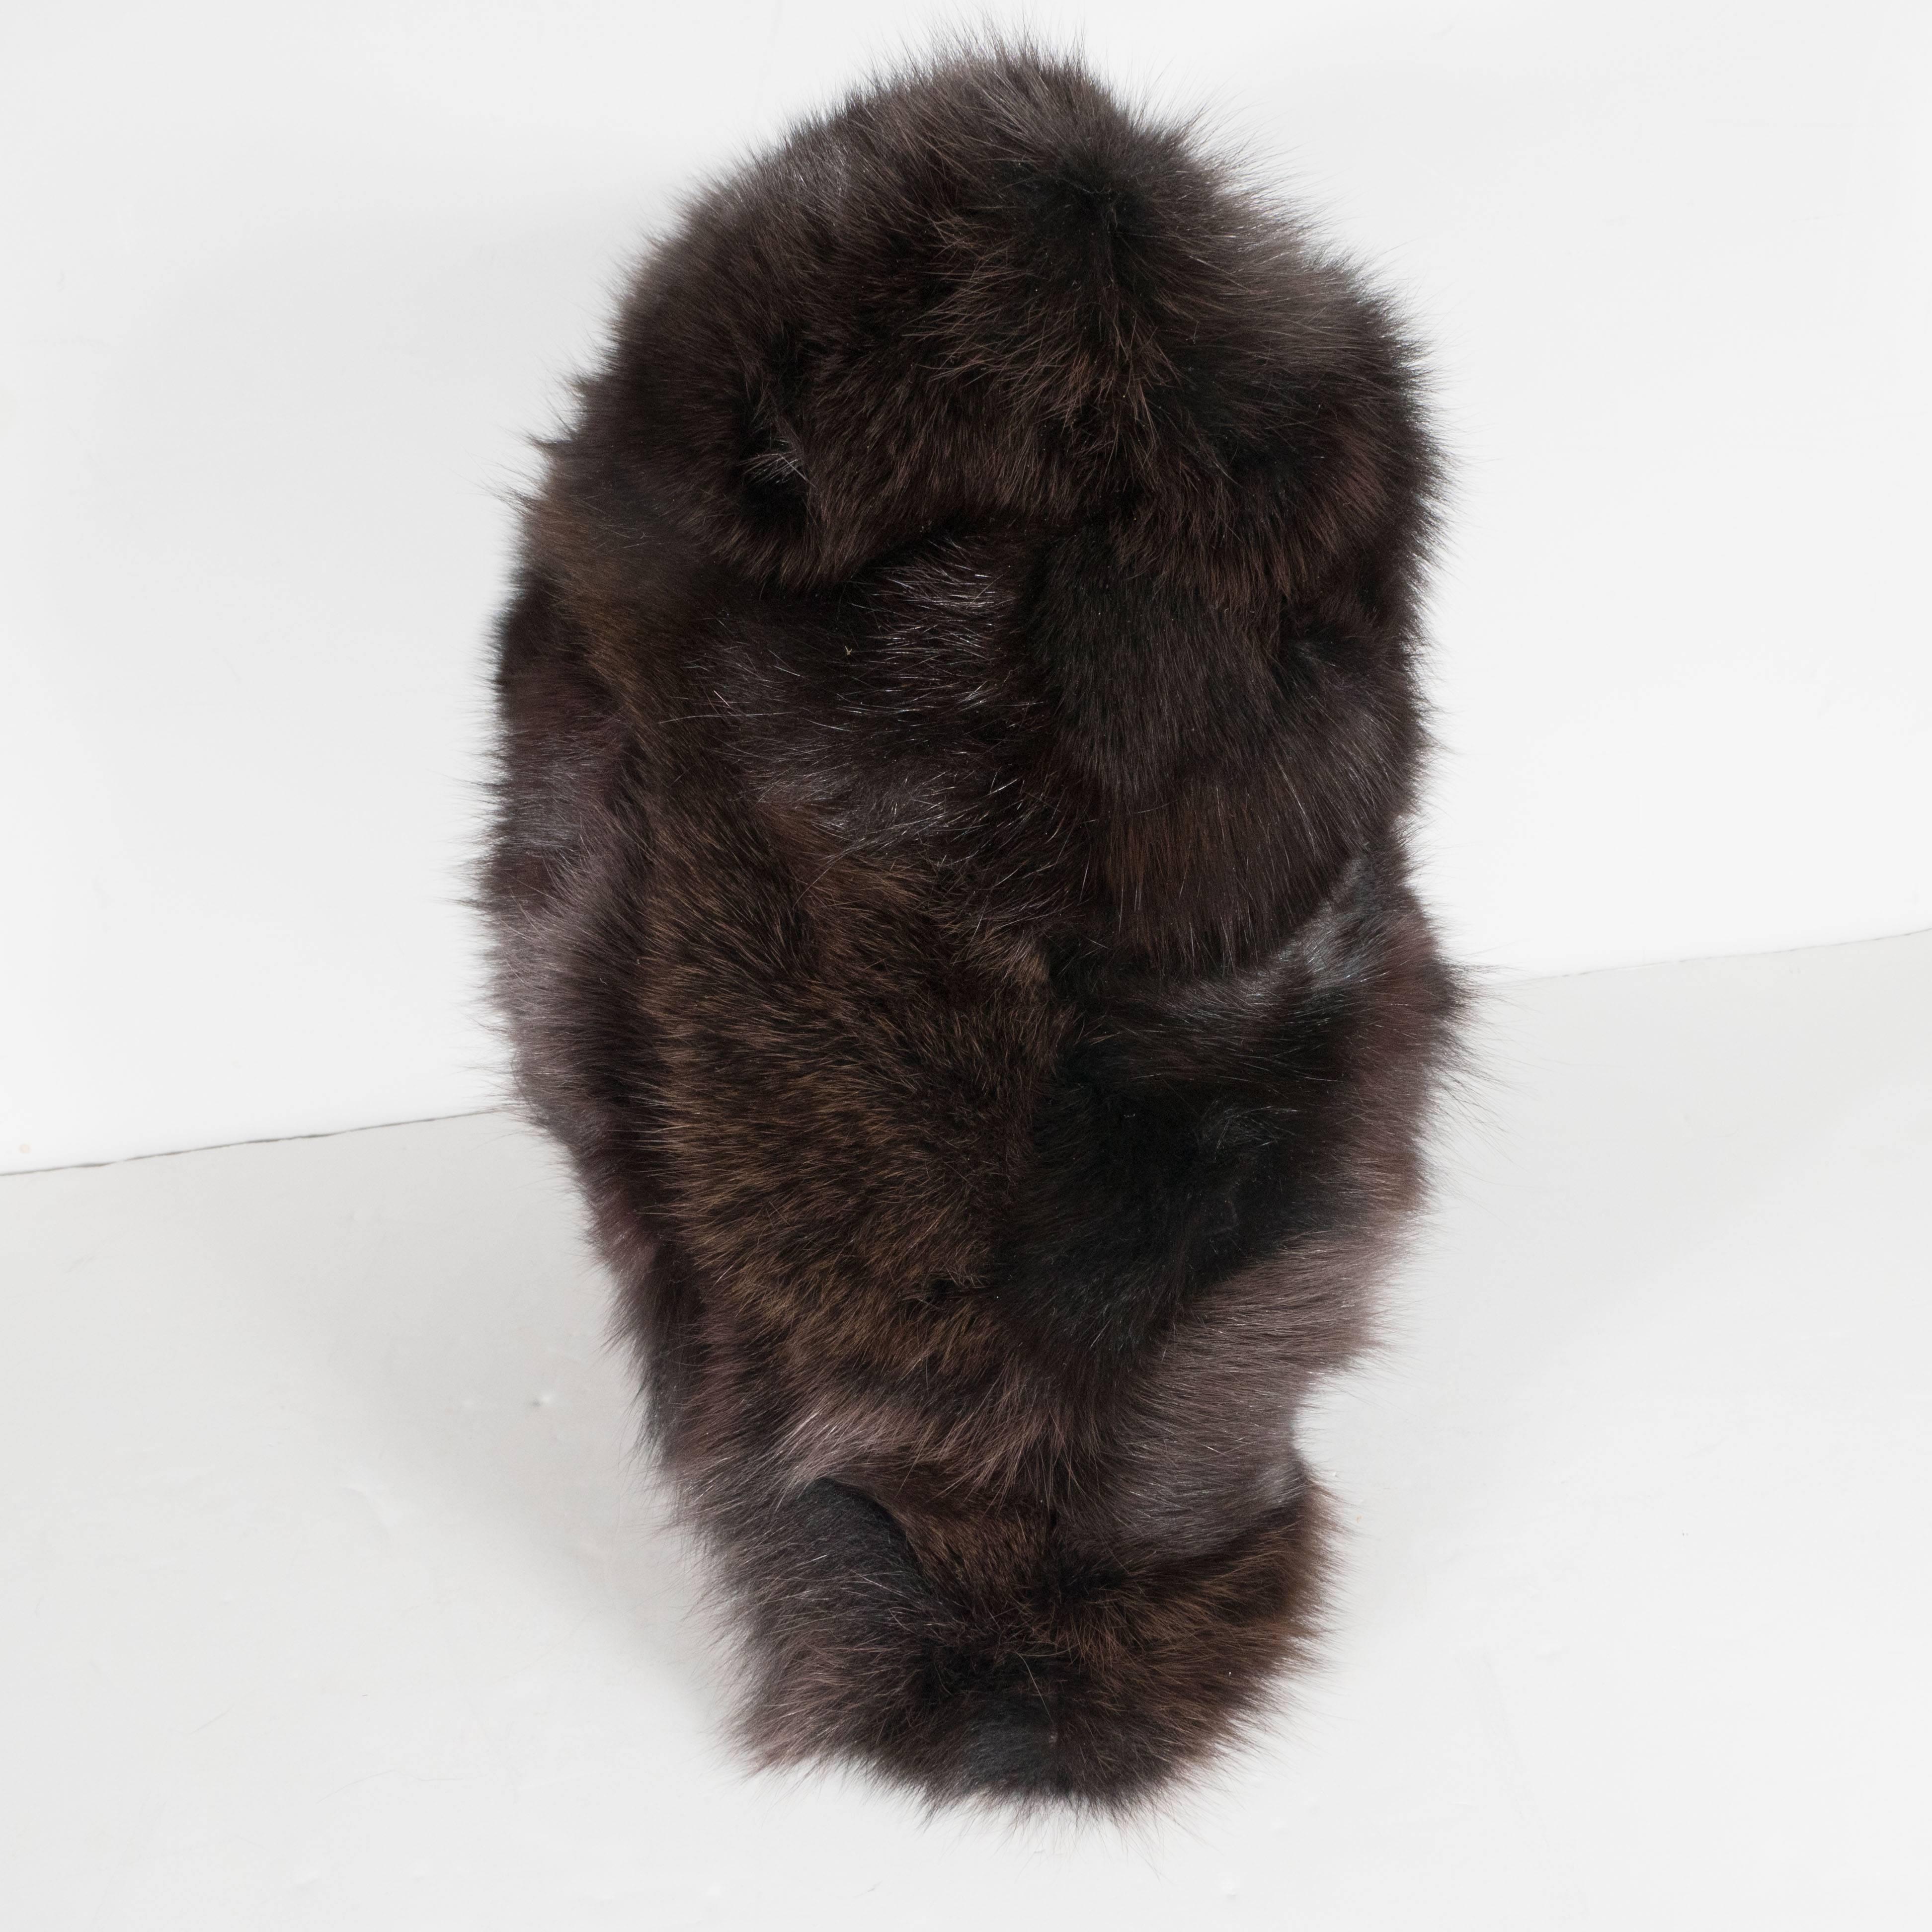 Modern Luxurious Custom New Handmade Fox Fur Pillows in a Stunning Onyx Shade For Sale